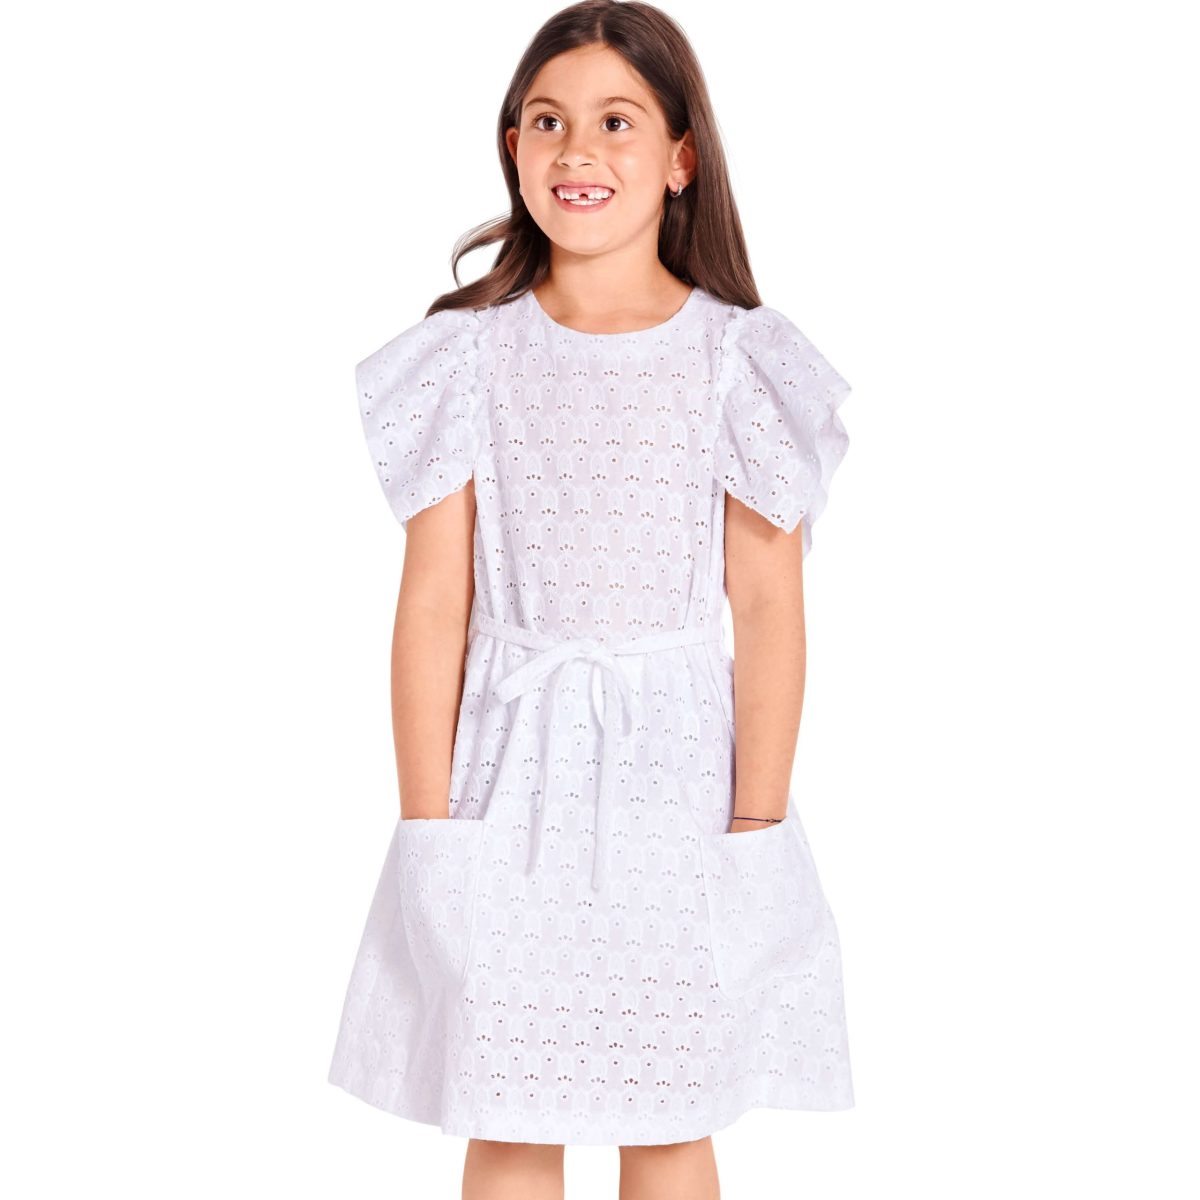 Burda Style Pattern 9264 Children's Dress and Blouse